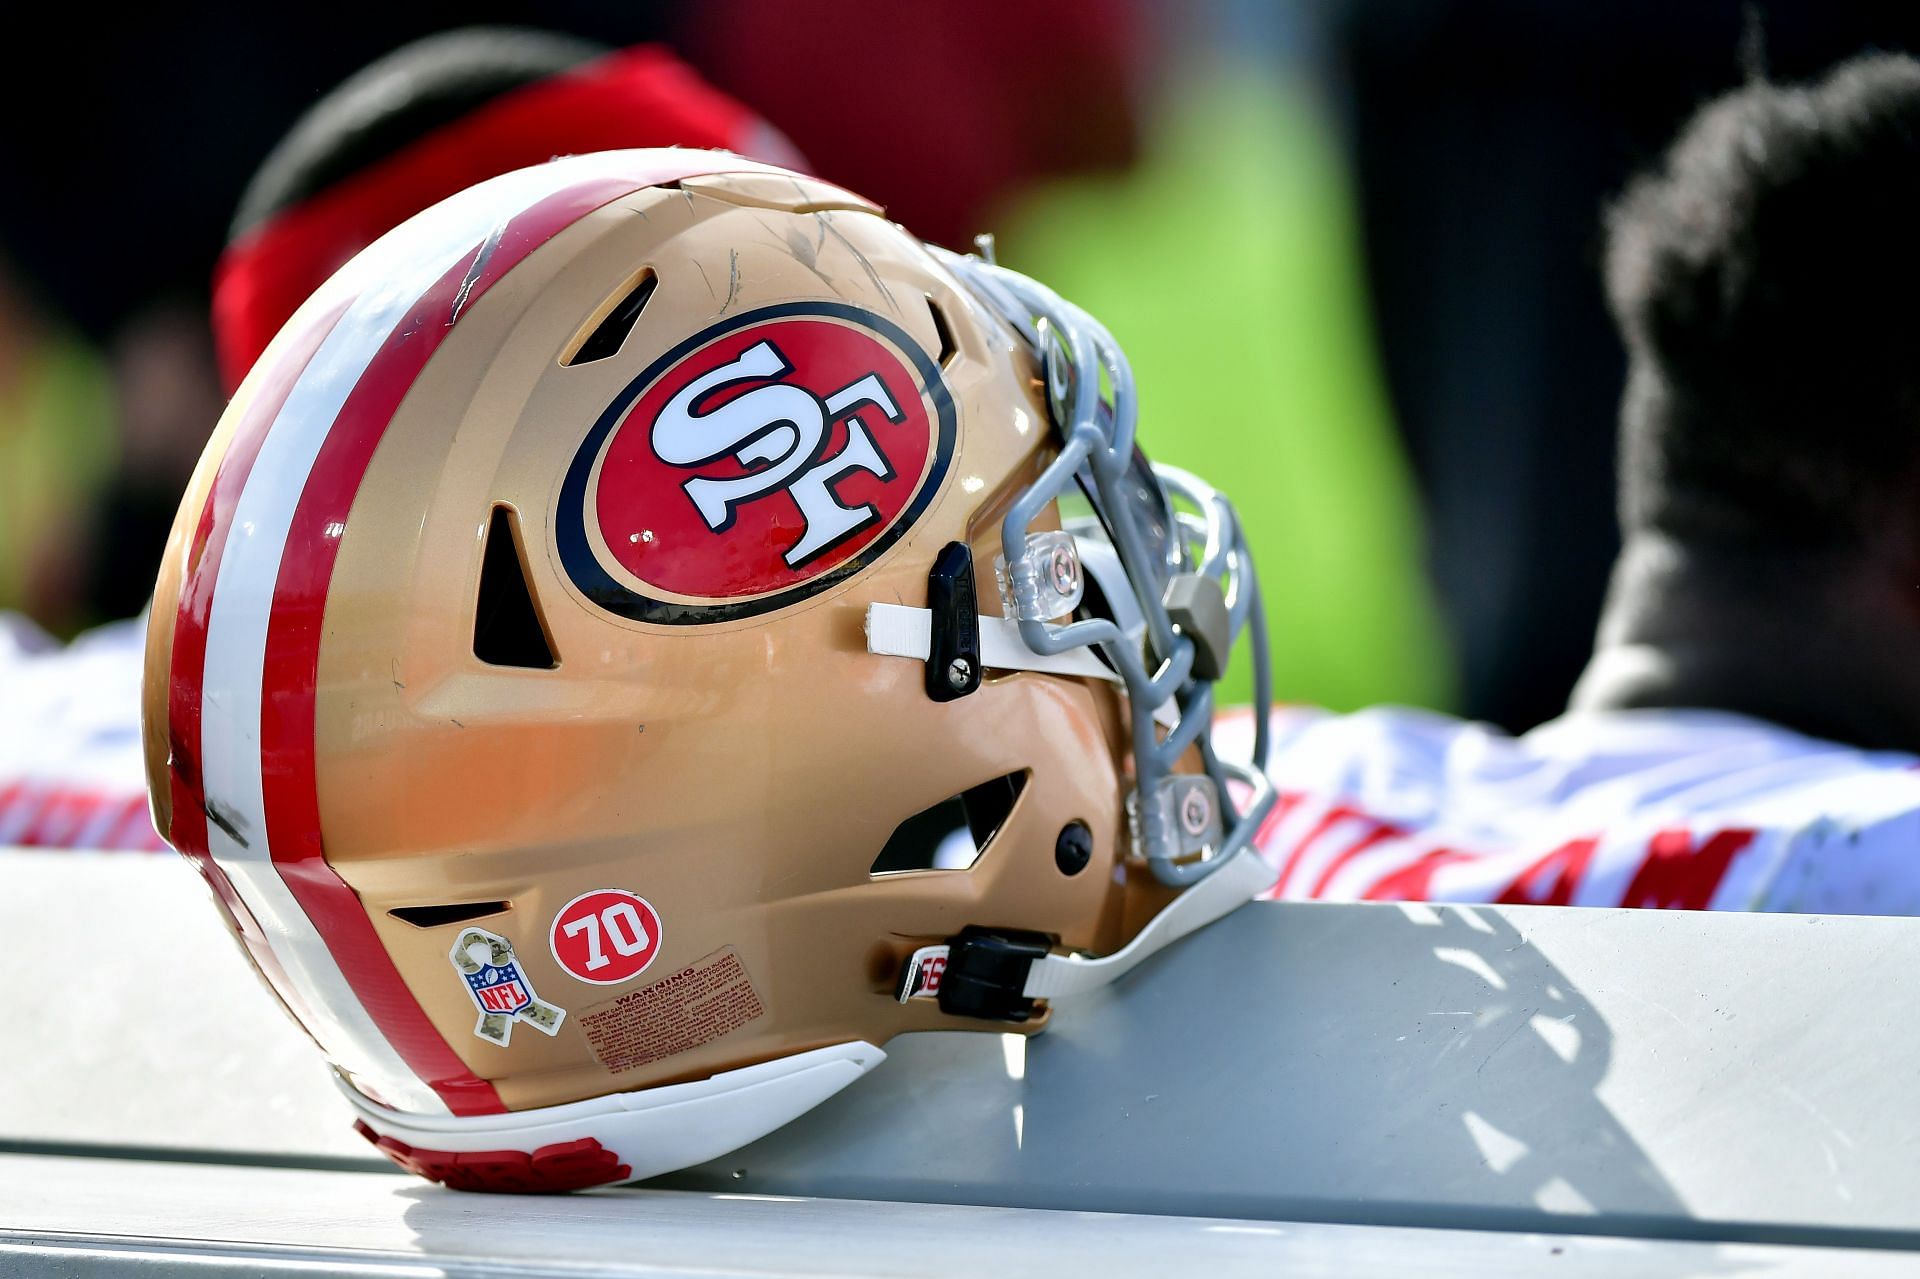 A 49ers helmet seen in 2021 (Photo: Getty)